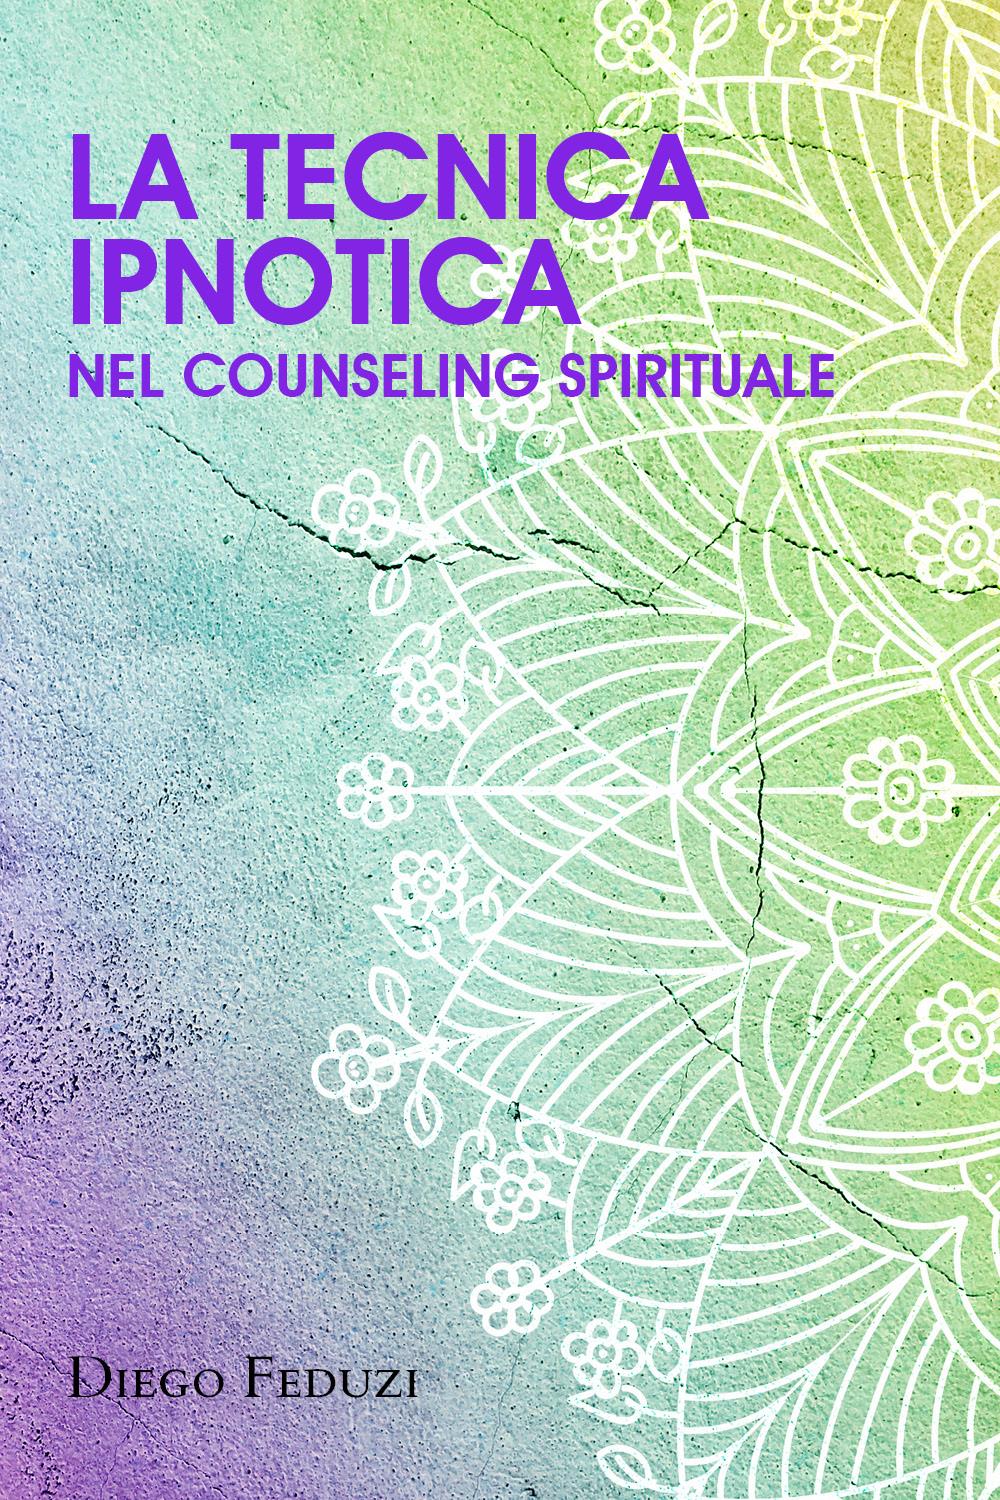 La tecnica ipnotica nel counseling spirituale